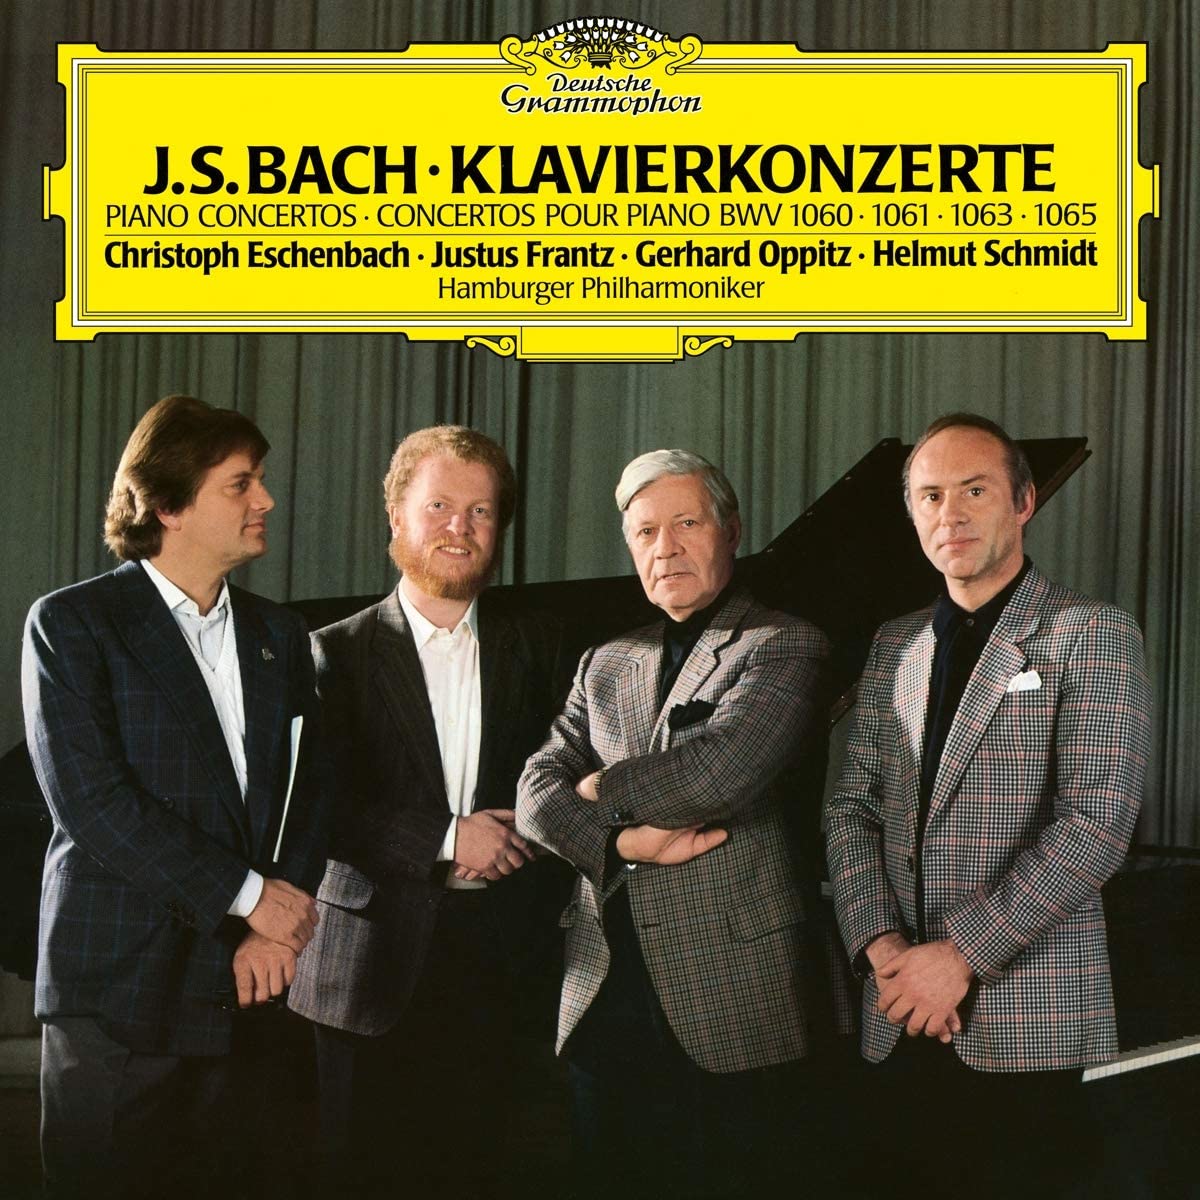 J.S. Bach: Klavierkonzerte - Vinyl | Christoph Eschenbach, Justus Frantz, Gerhard Oppitz, Helmut Schmidt